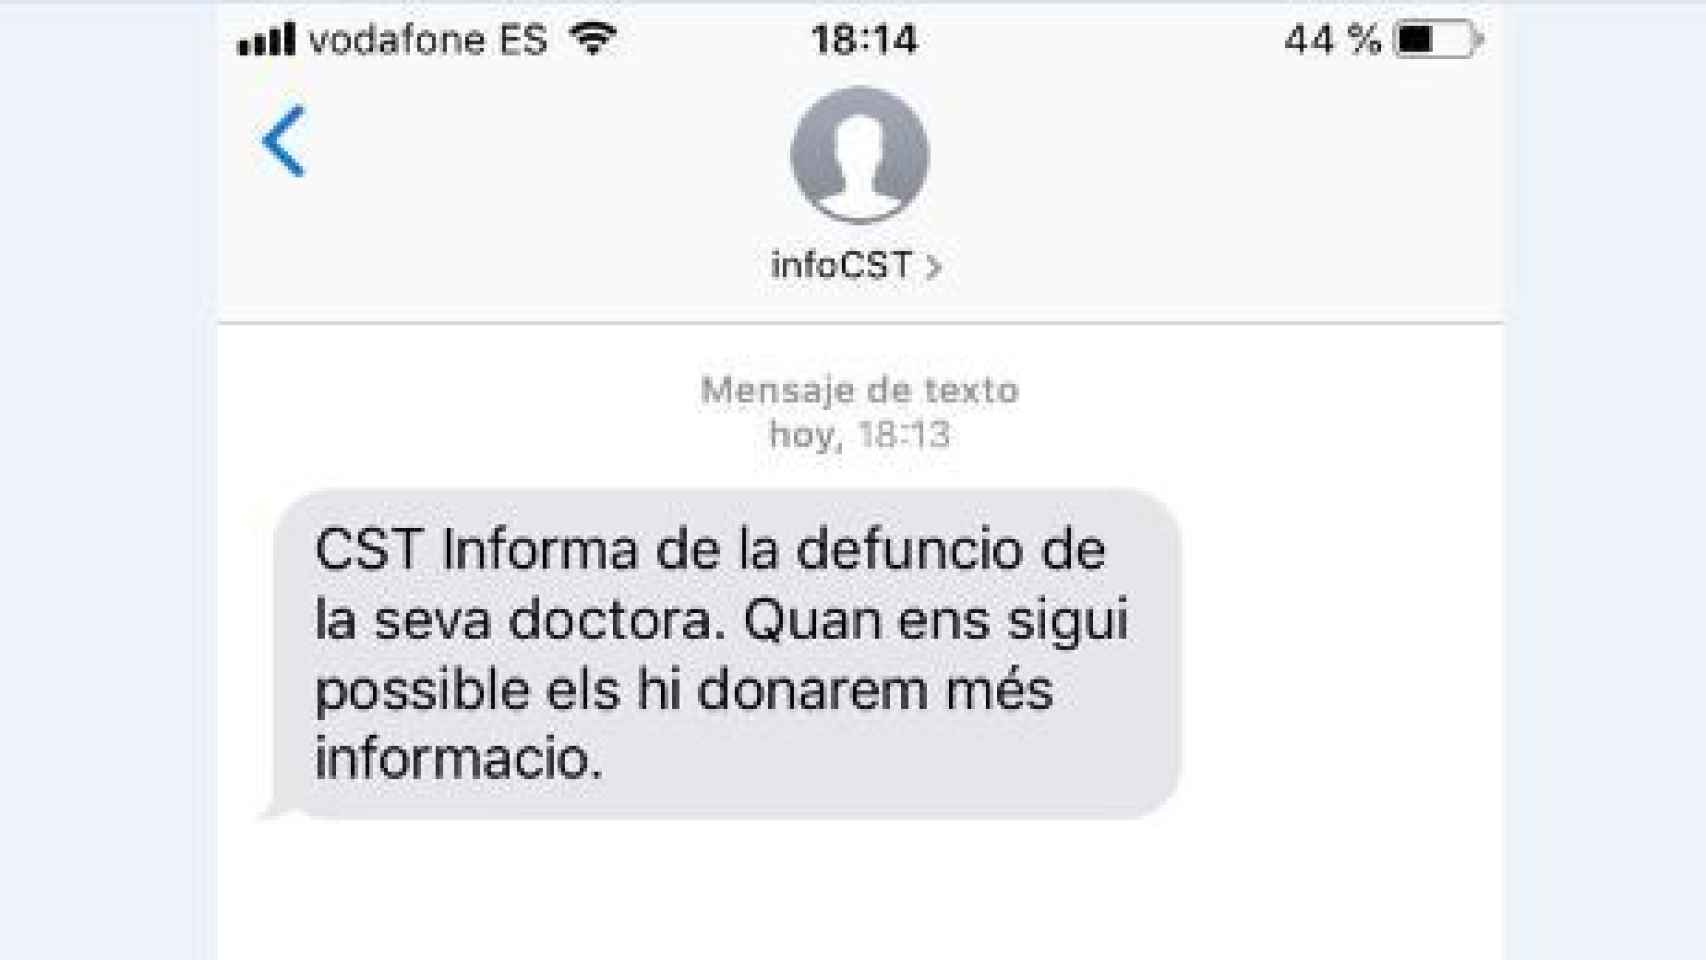 El Consorci Sanitari me informa por sms de la muerte de mi doctora